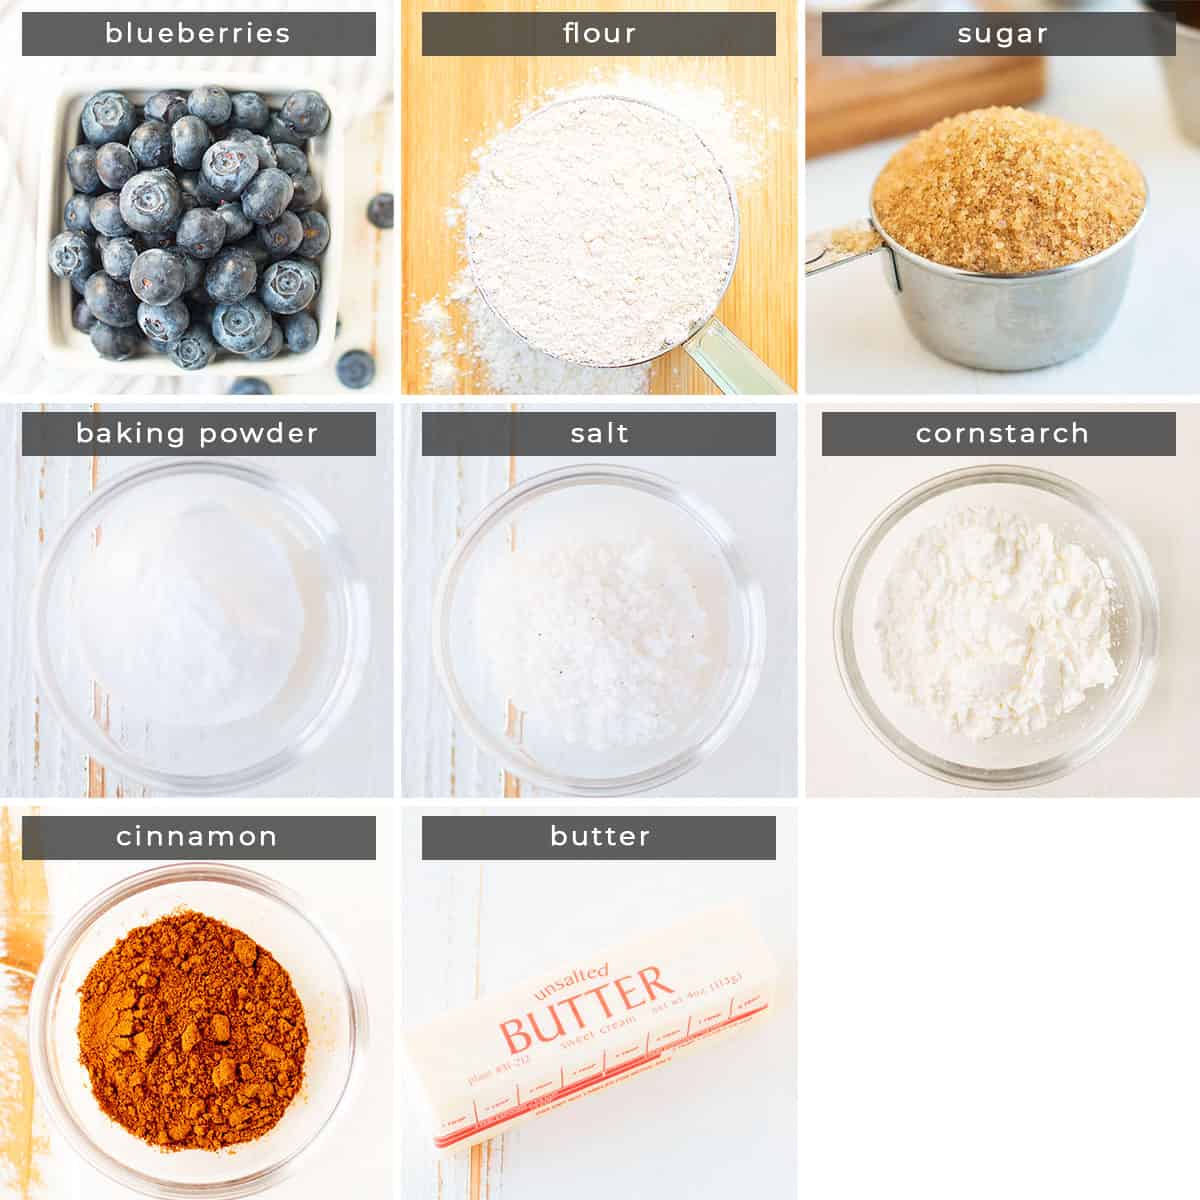 Image containing recipe ingredients blueberries, flour, sugar, baking powder, salt, cornstarch, cinnamon, and butter.